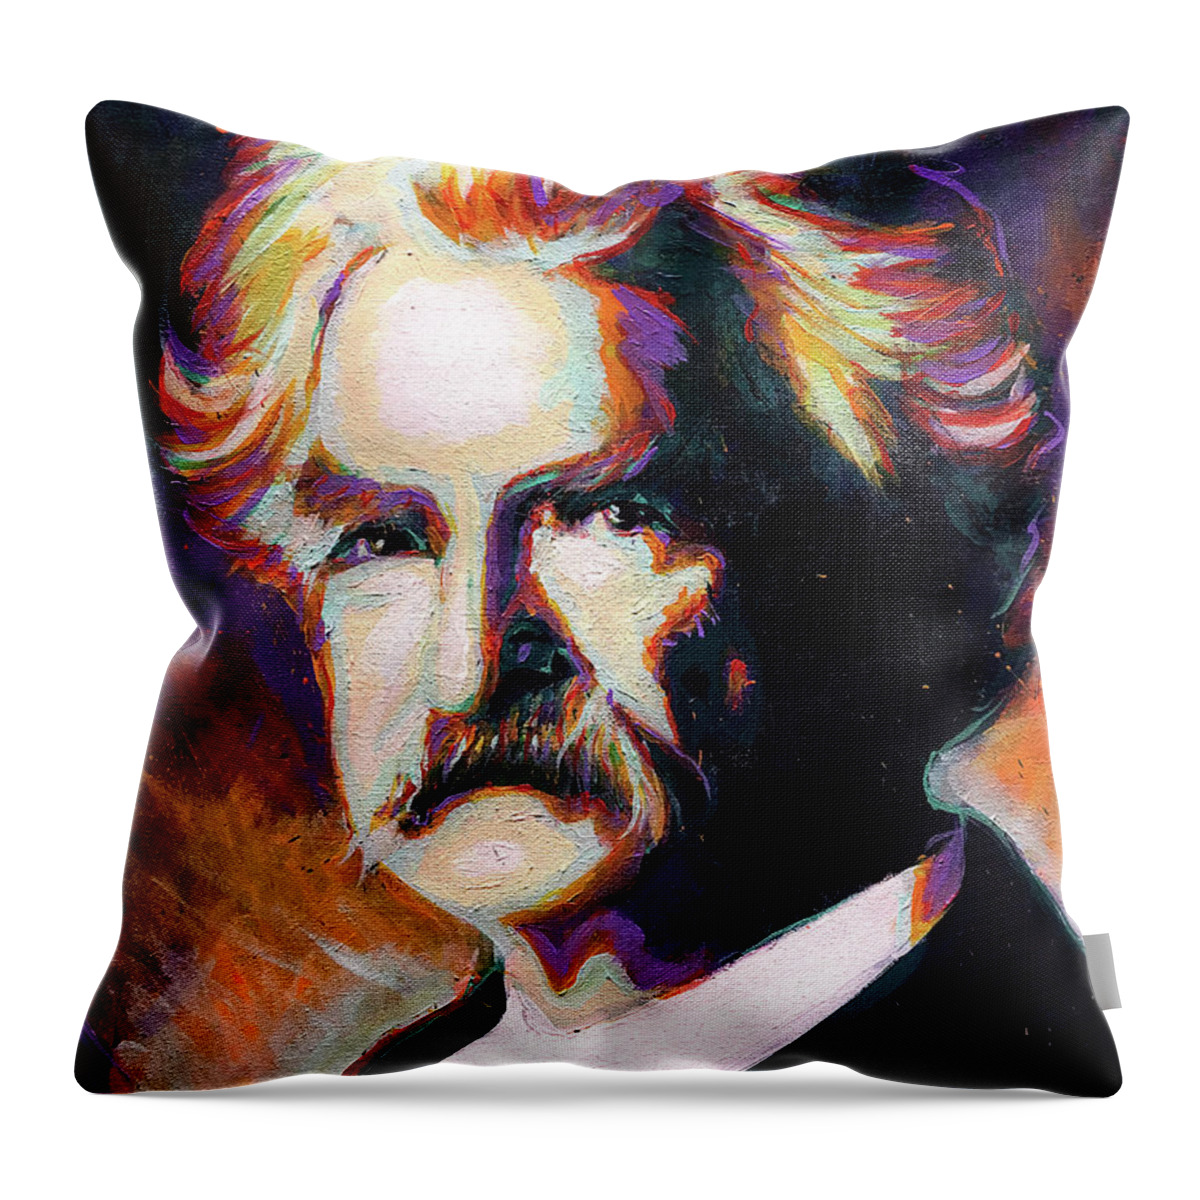 Mark Twain Throw Pillow featuring the painting Mark Twain by Steve Gamba